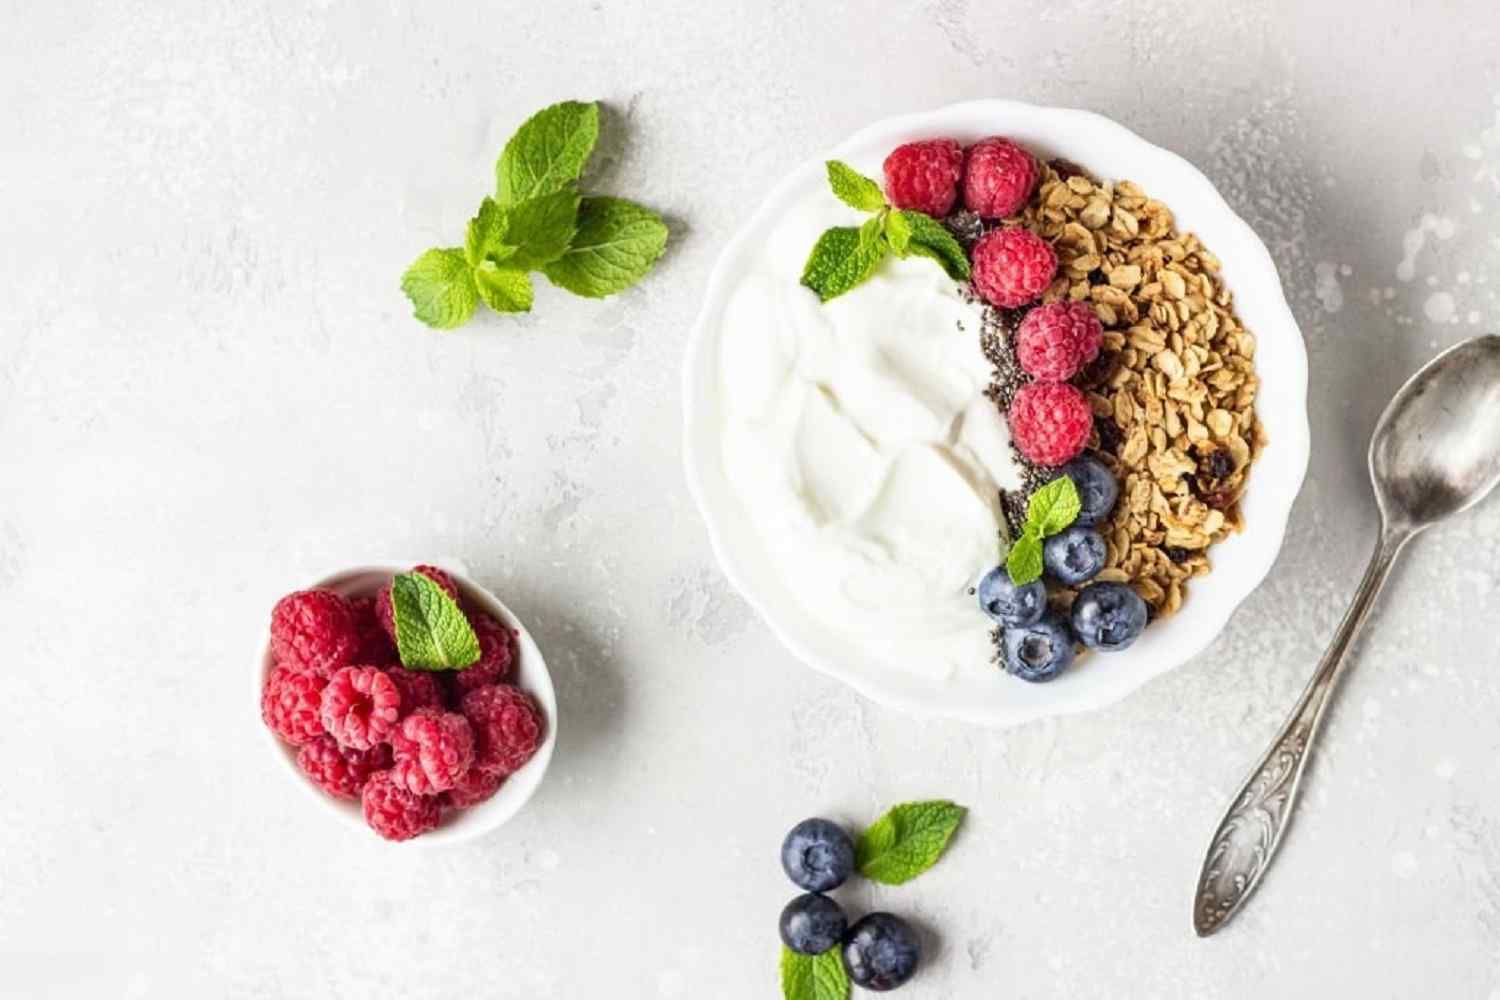 Whole milk yogurt with mixed berries